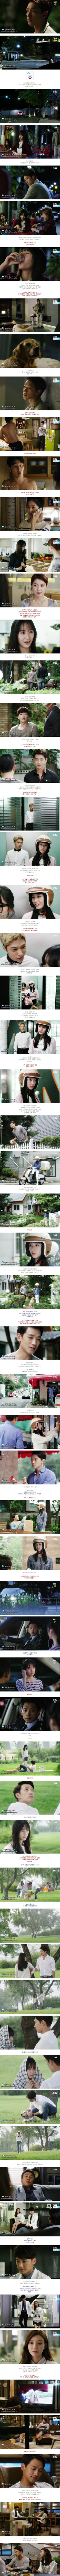 episode 2 captures for the Korean drama 'My Lovely Girl'